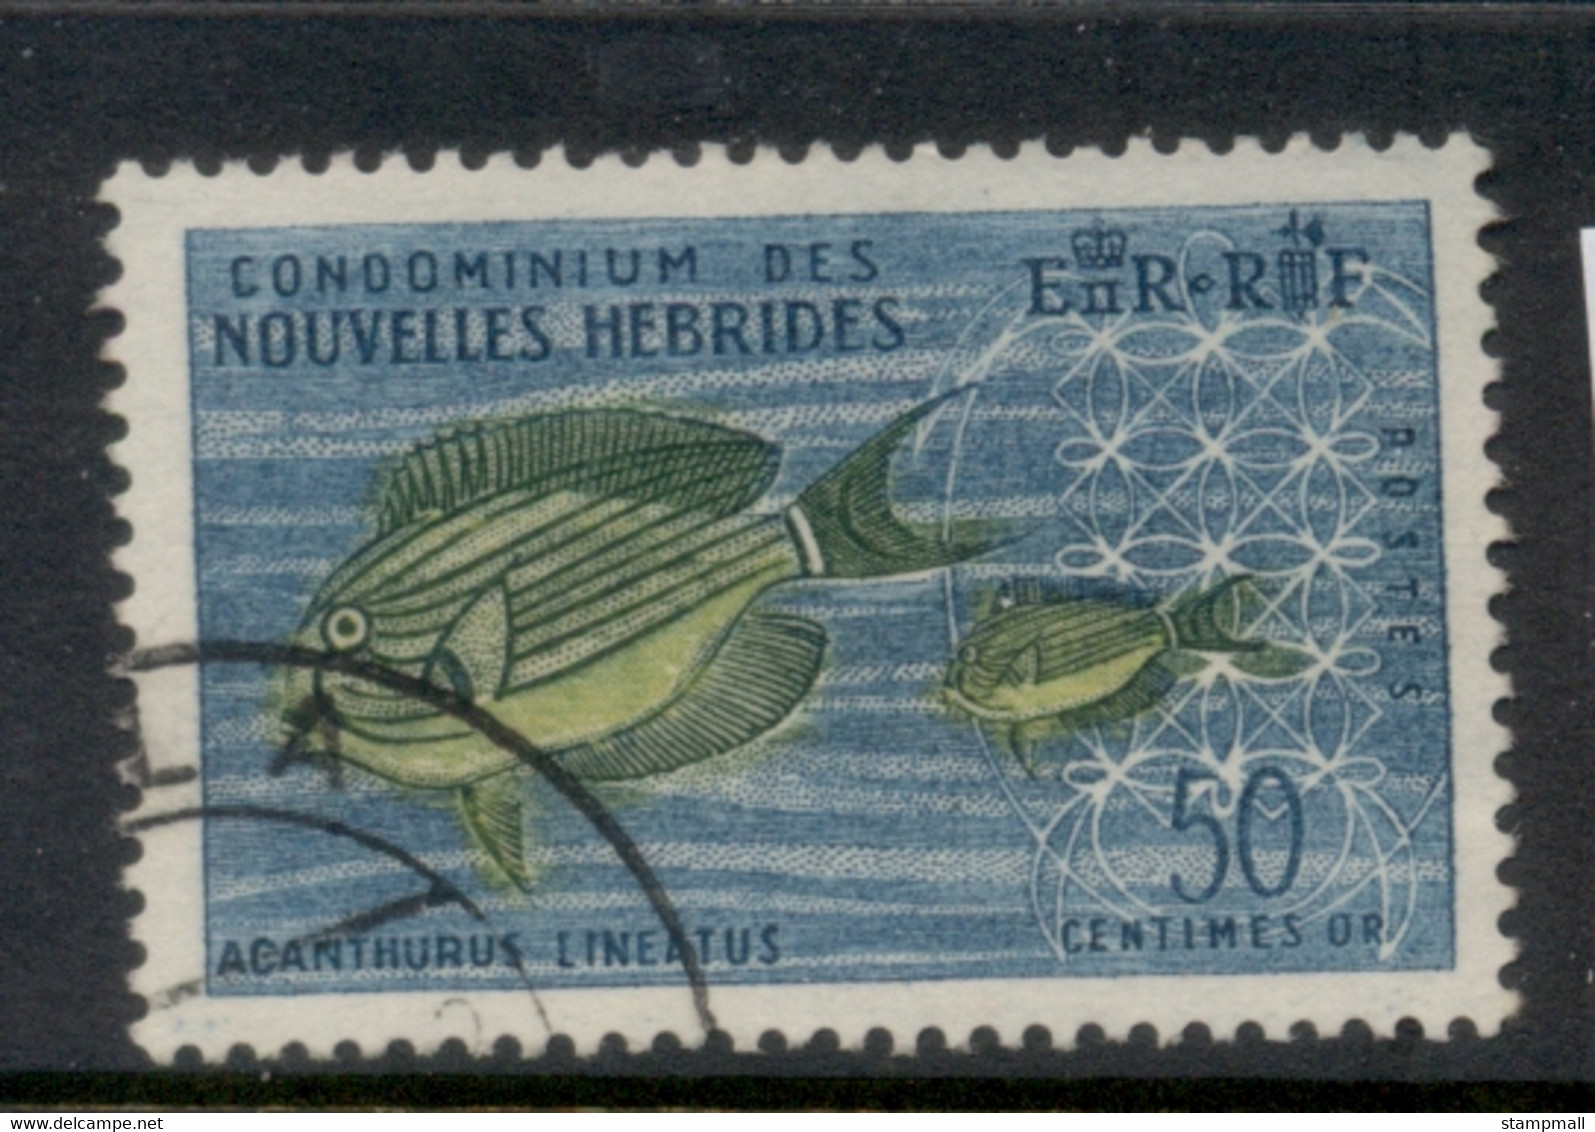 New Hebrides (Fr) 1963-67 Pictorials 50c FU - Used Stamps